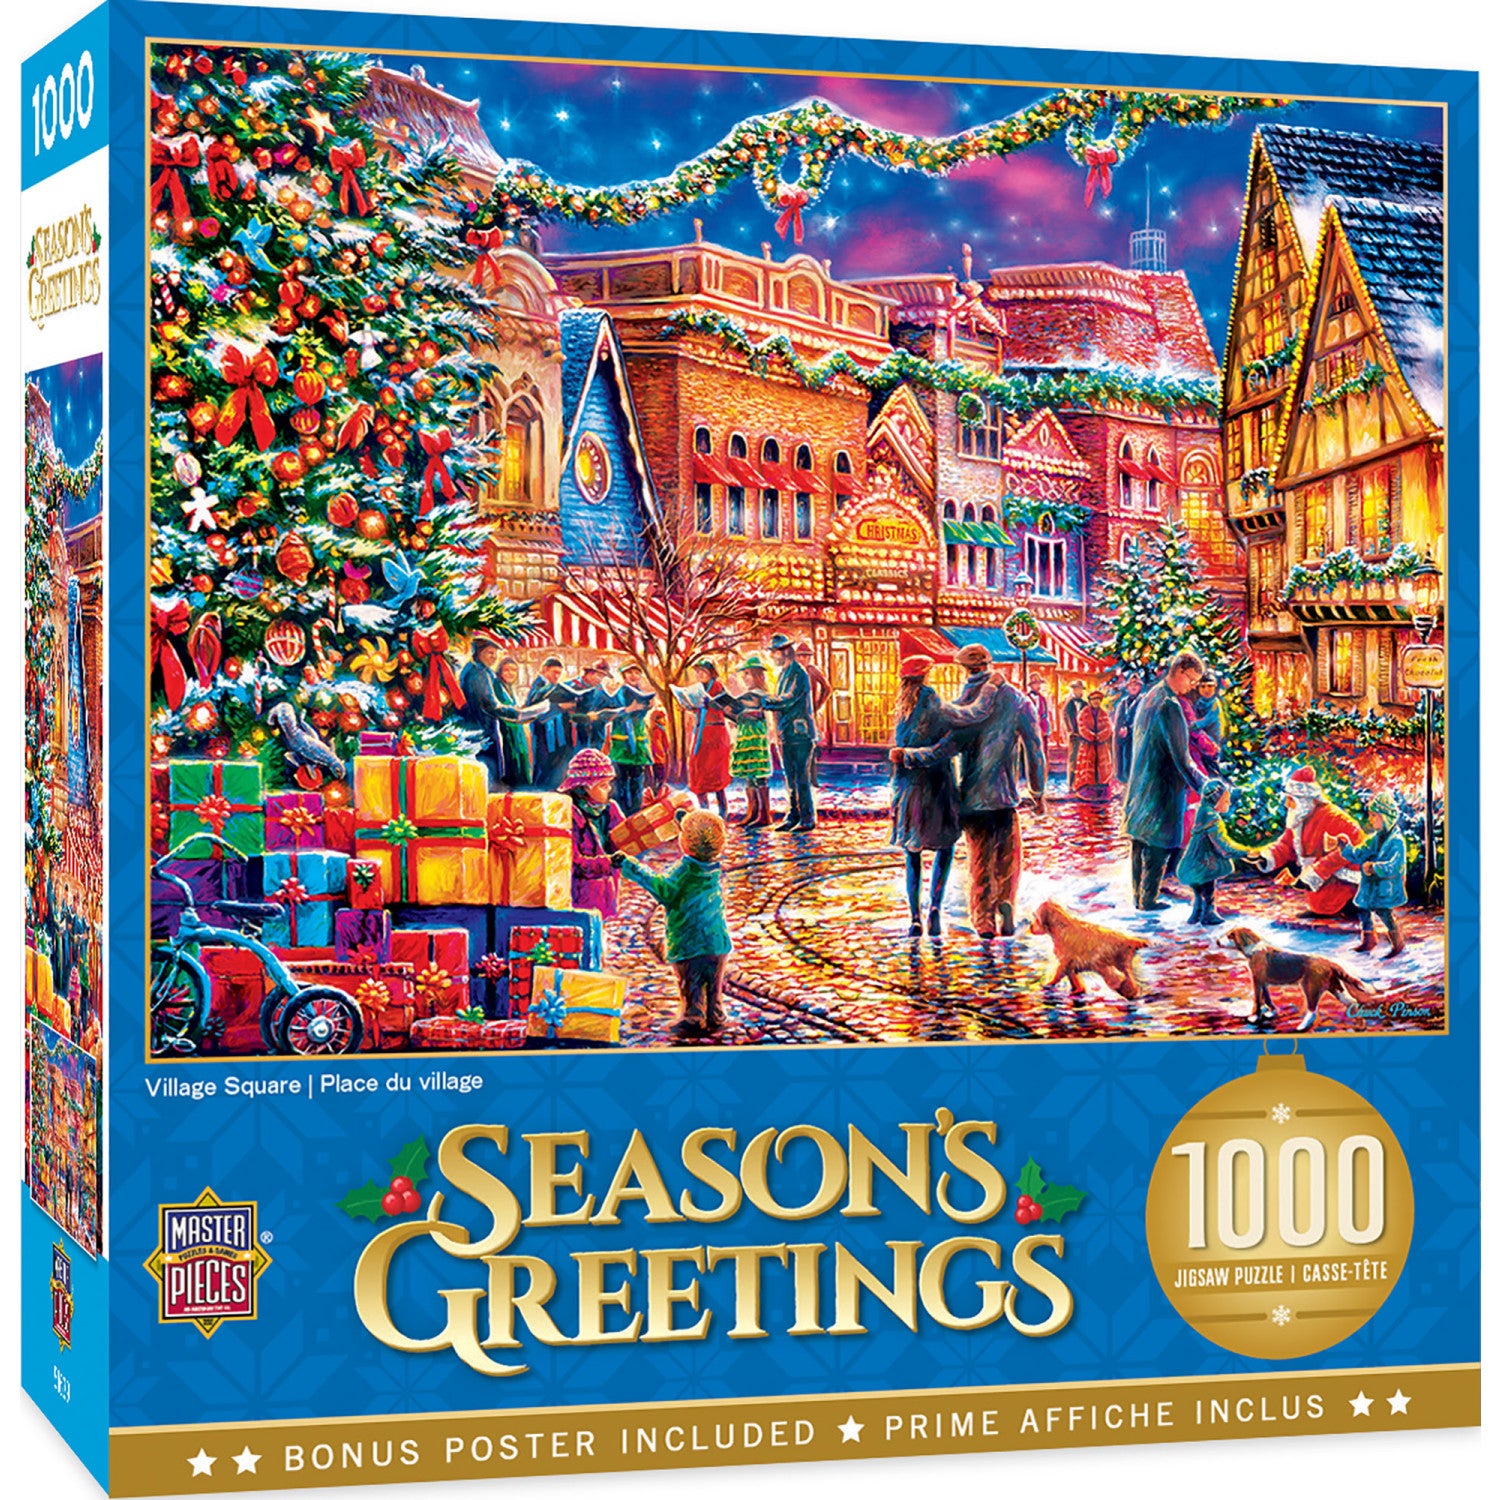 Season's Greetings - Village Square 1000 Piece Jigsaw Puzzle